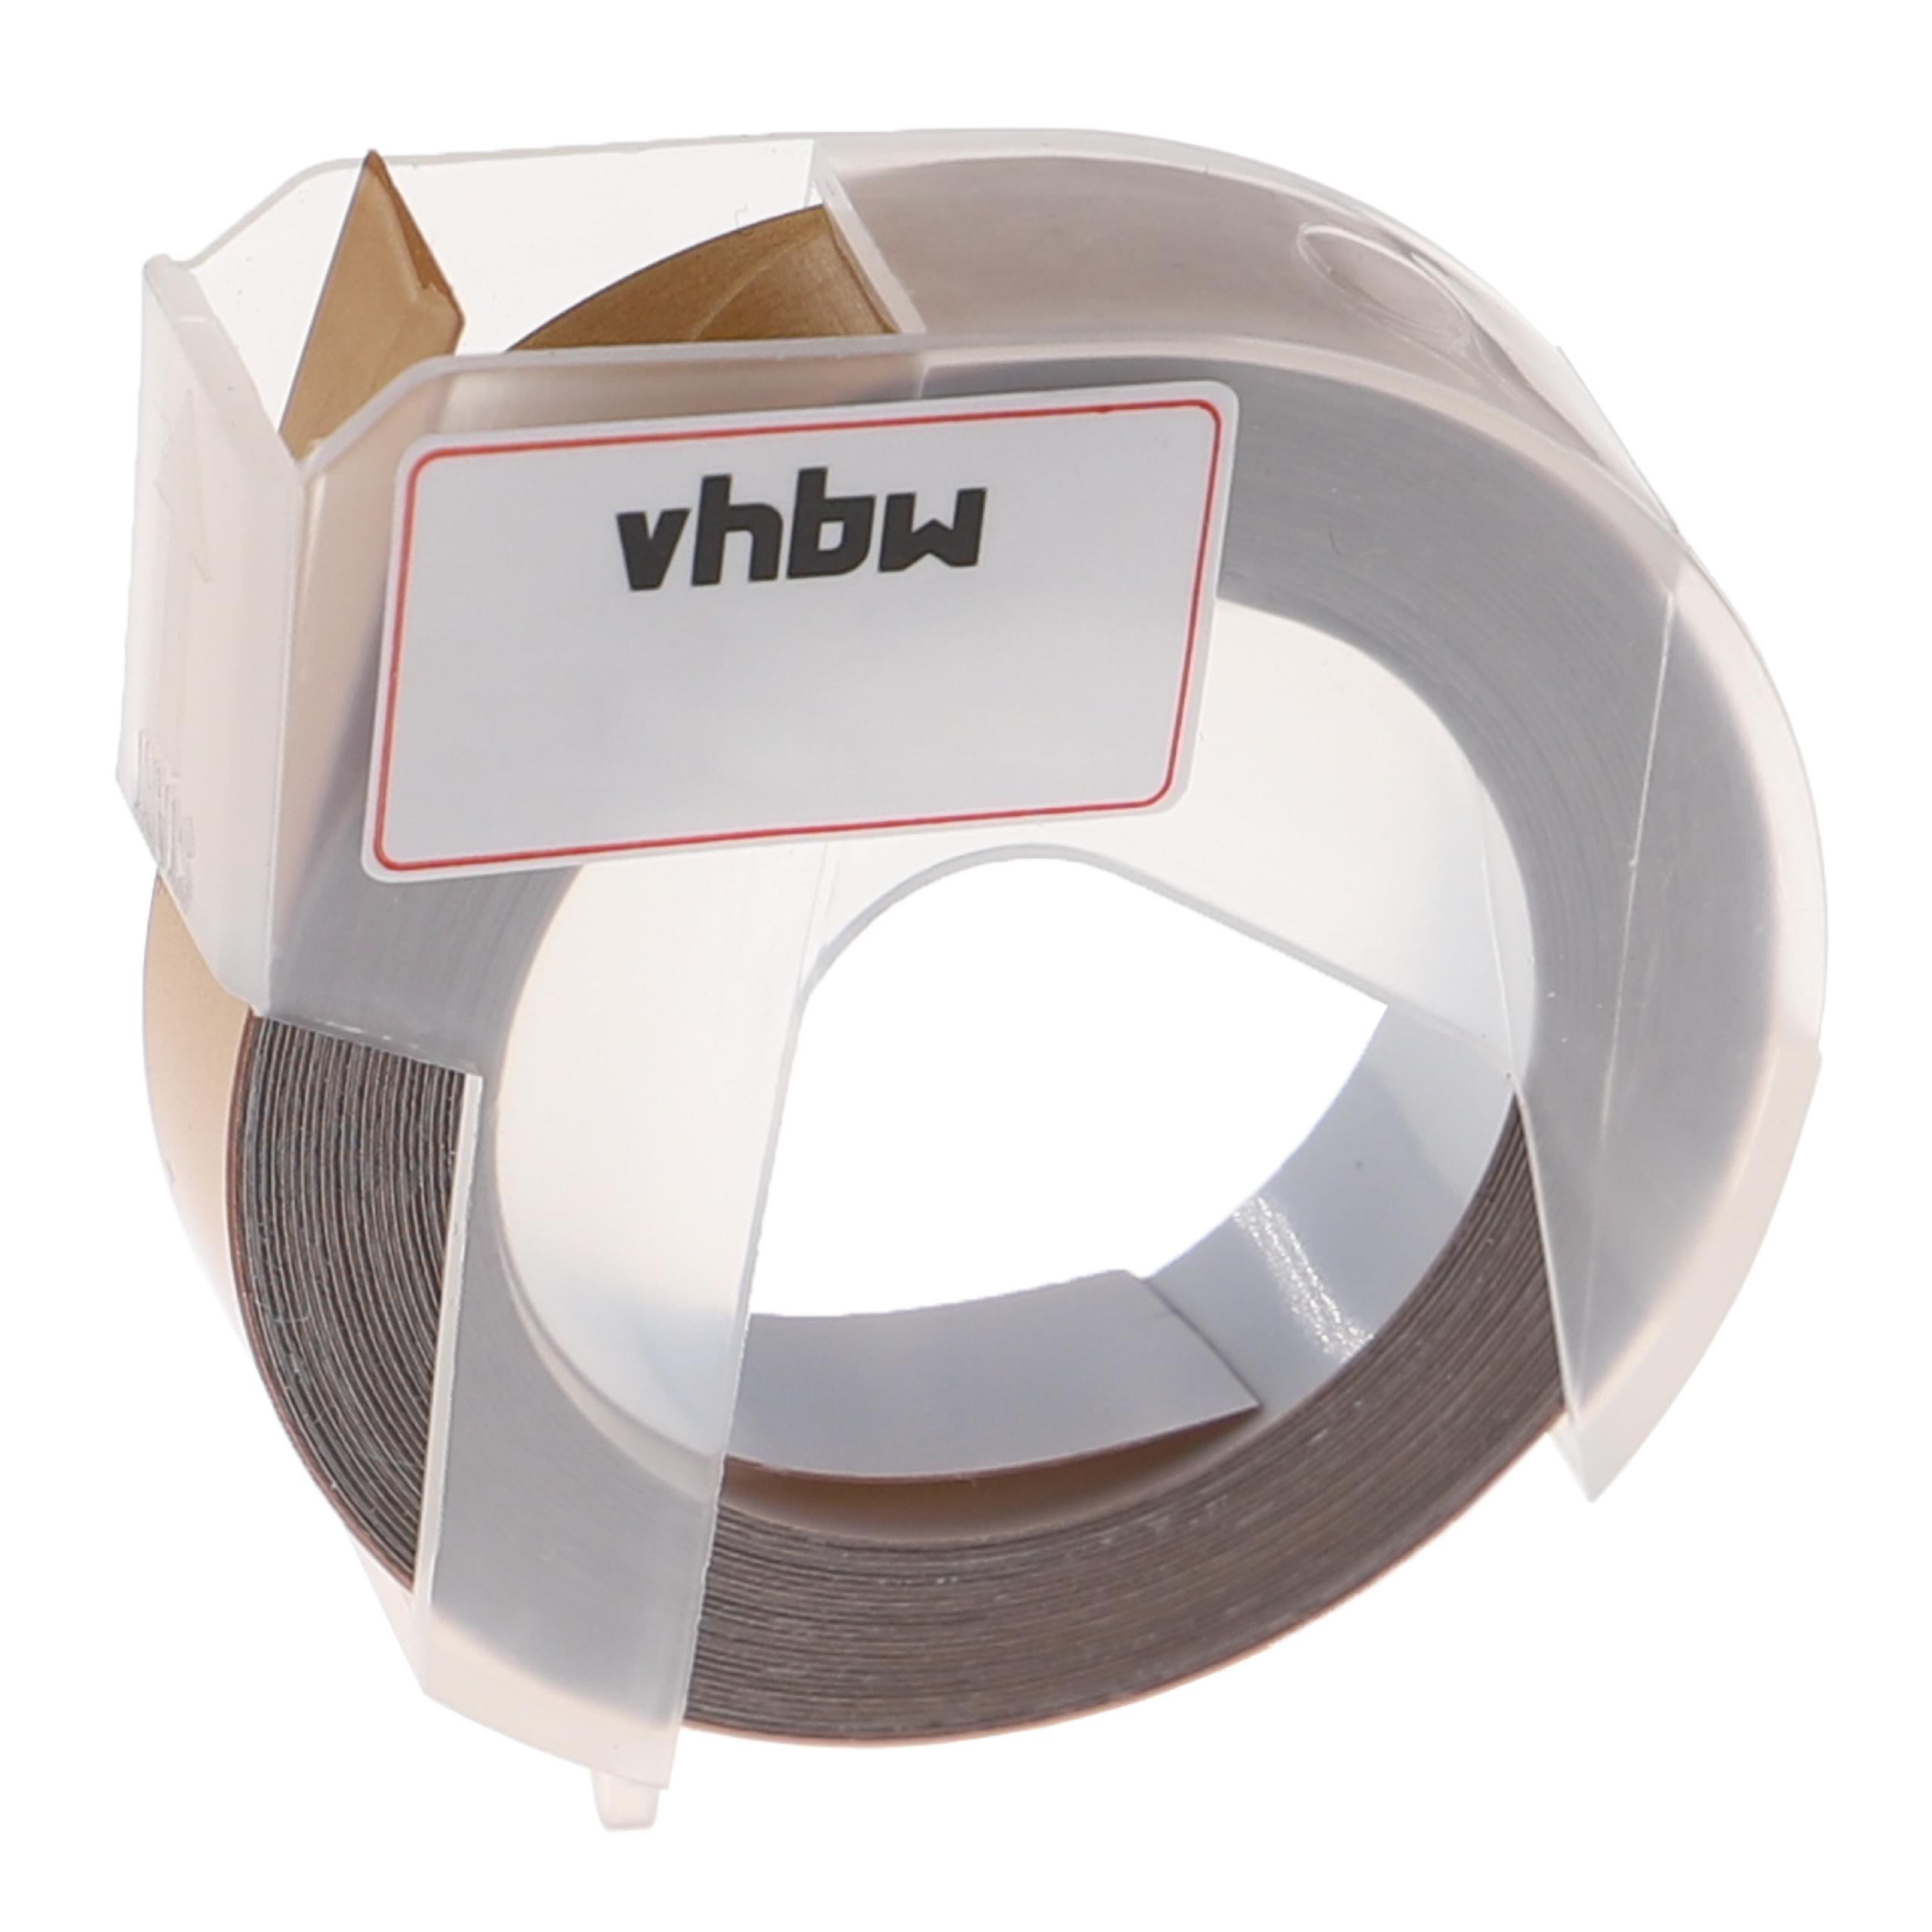 Cassette à ruban, gaufrage relief remplace Dymo 0898140 - 9mm lettrage Blanc ruban Or